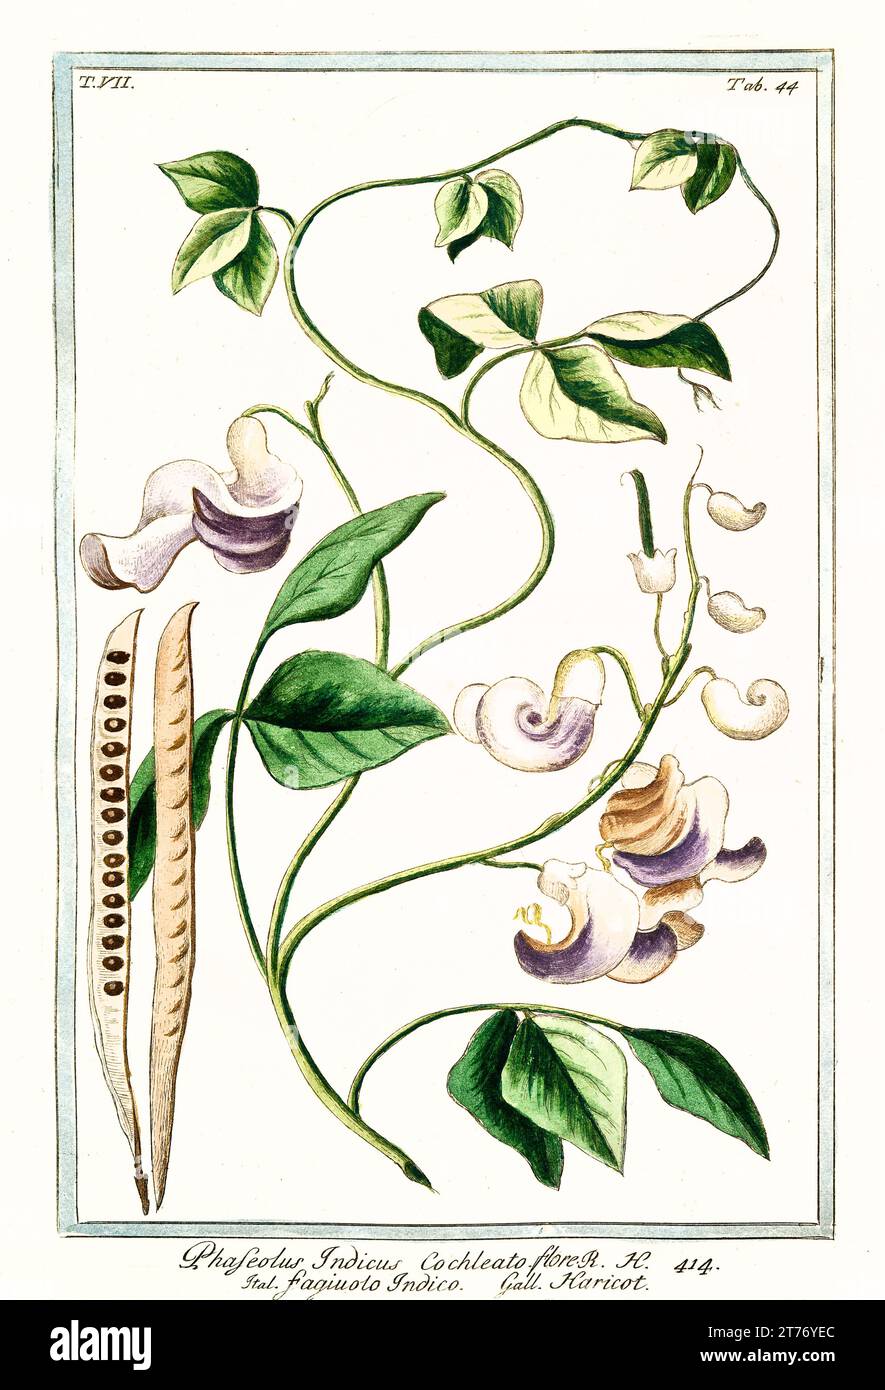 Old illustration of Common bean (Phaseolus vulgaris). By G. Bonelli on Hortus Romanus, publ. N. Martelli, Rome, 1772 – 93 Stock Photo